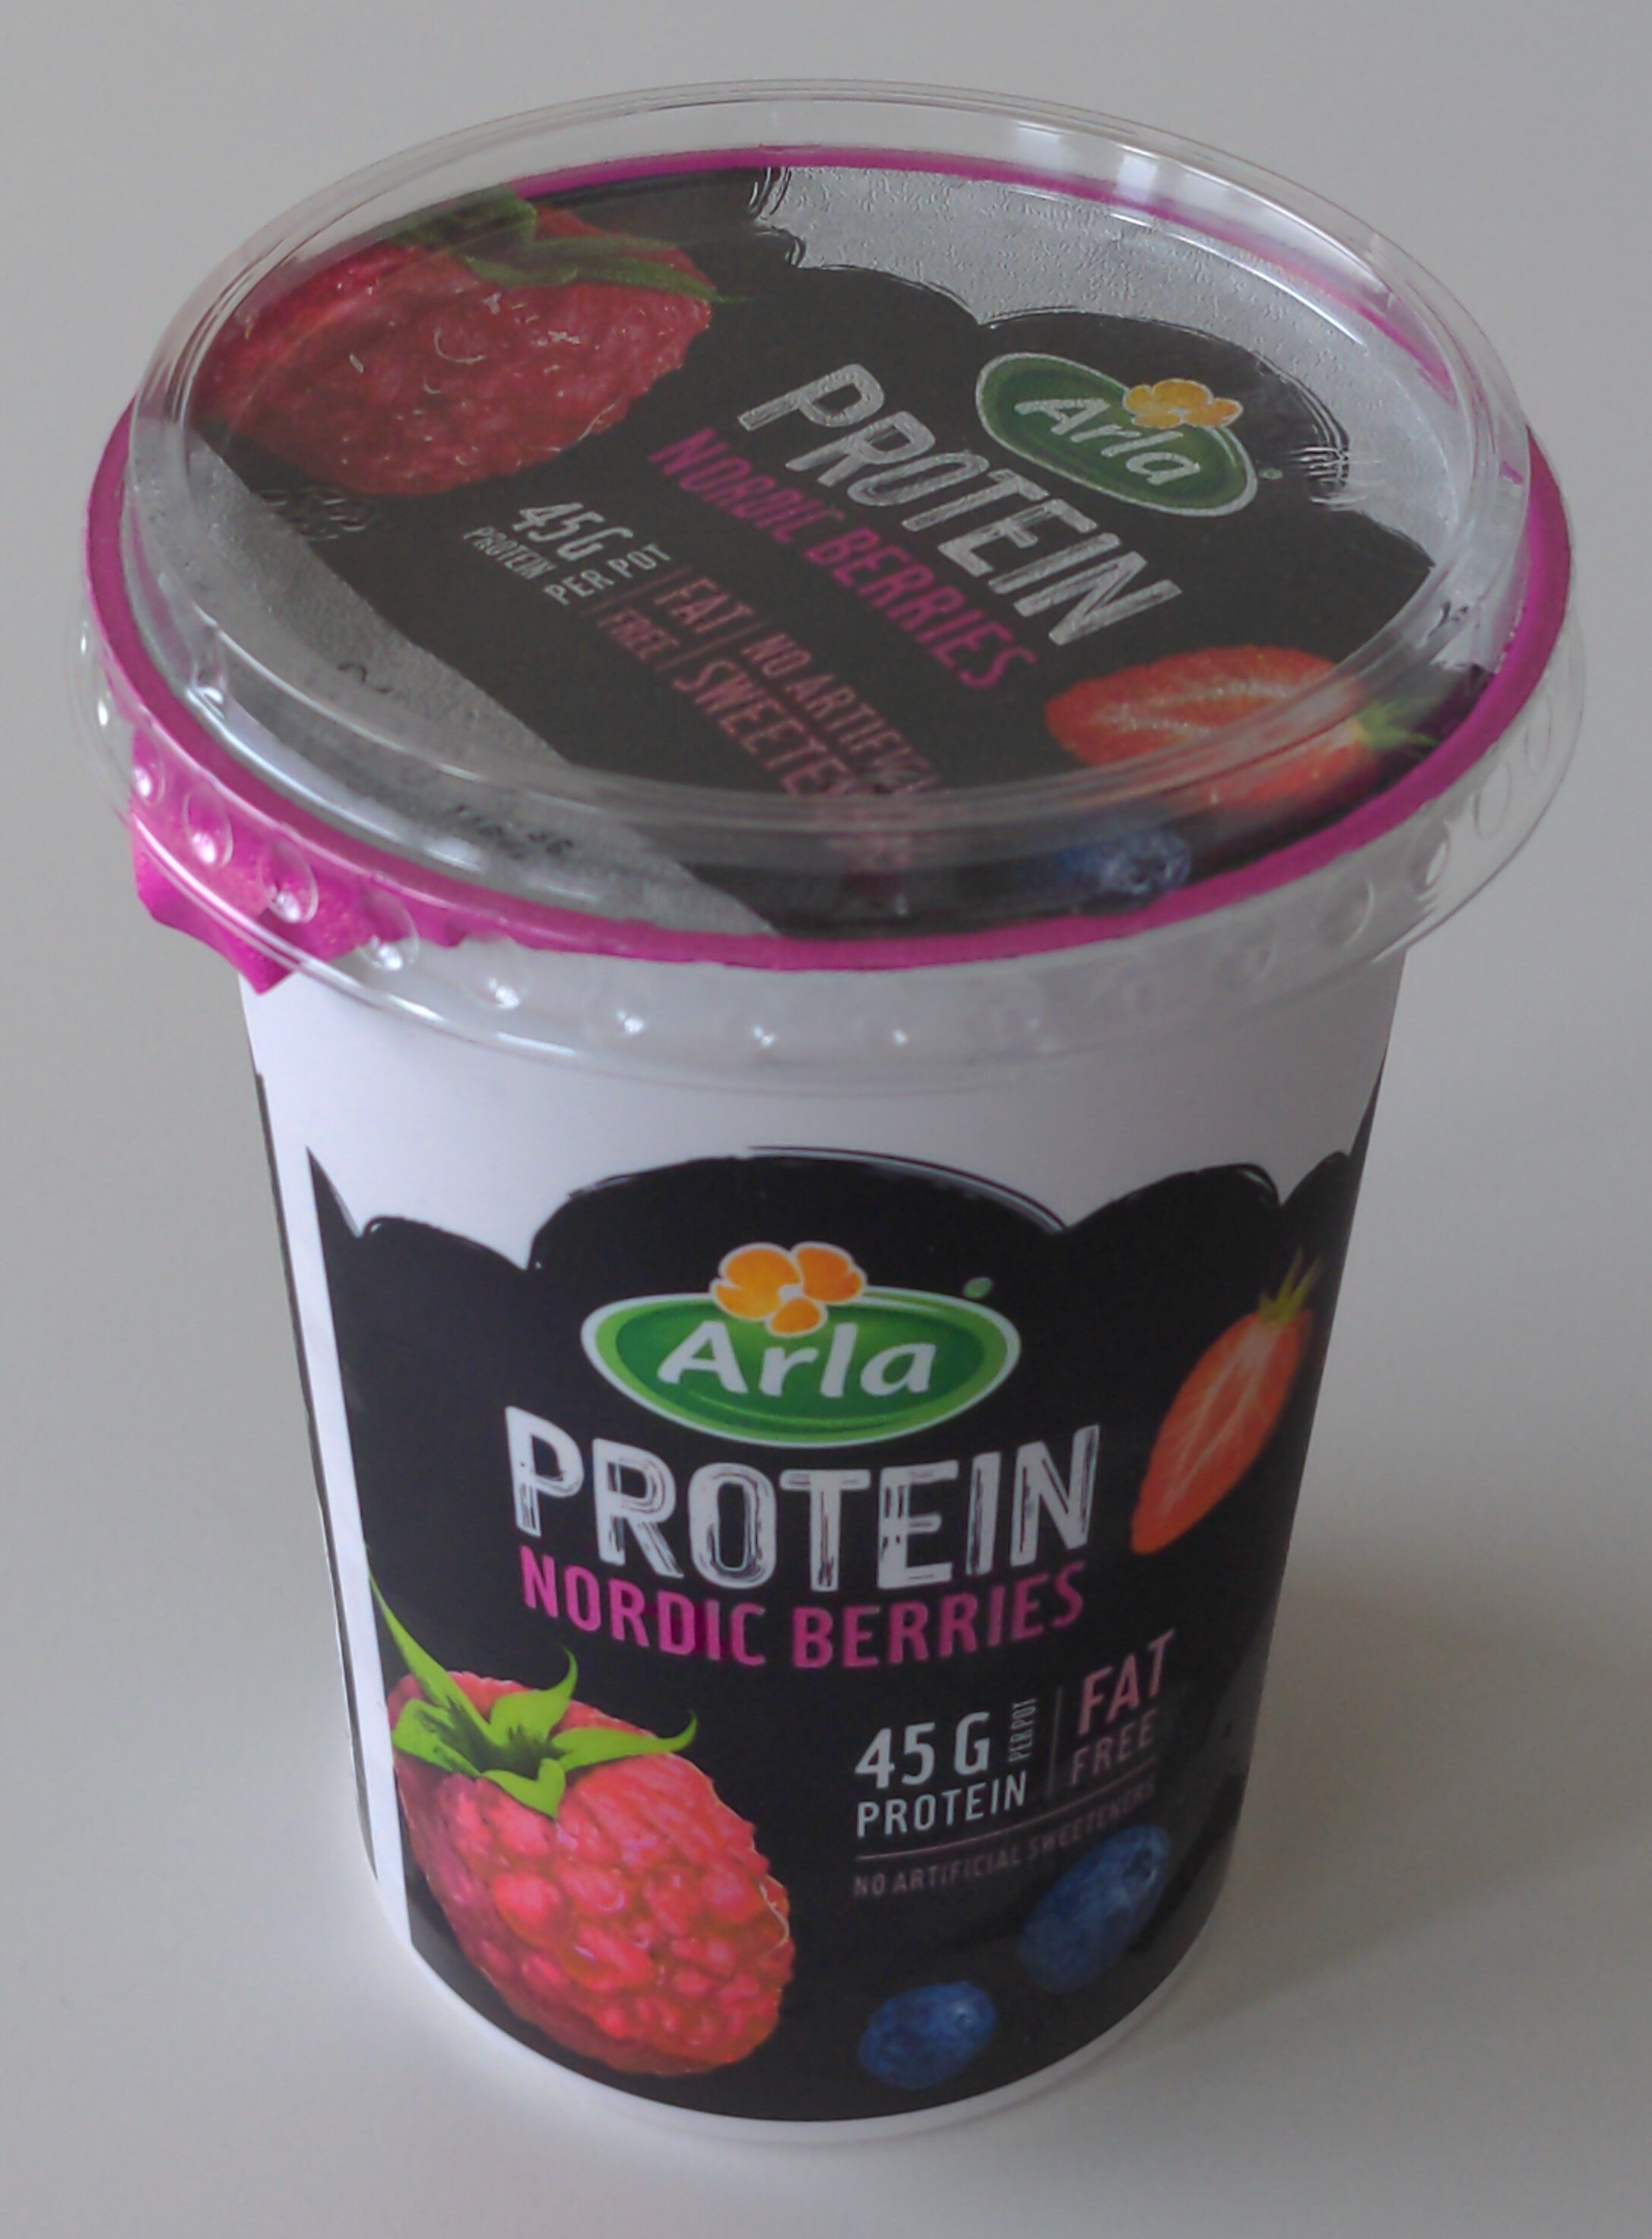 Protein Nordic Berries - Produit - fi